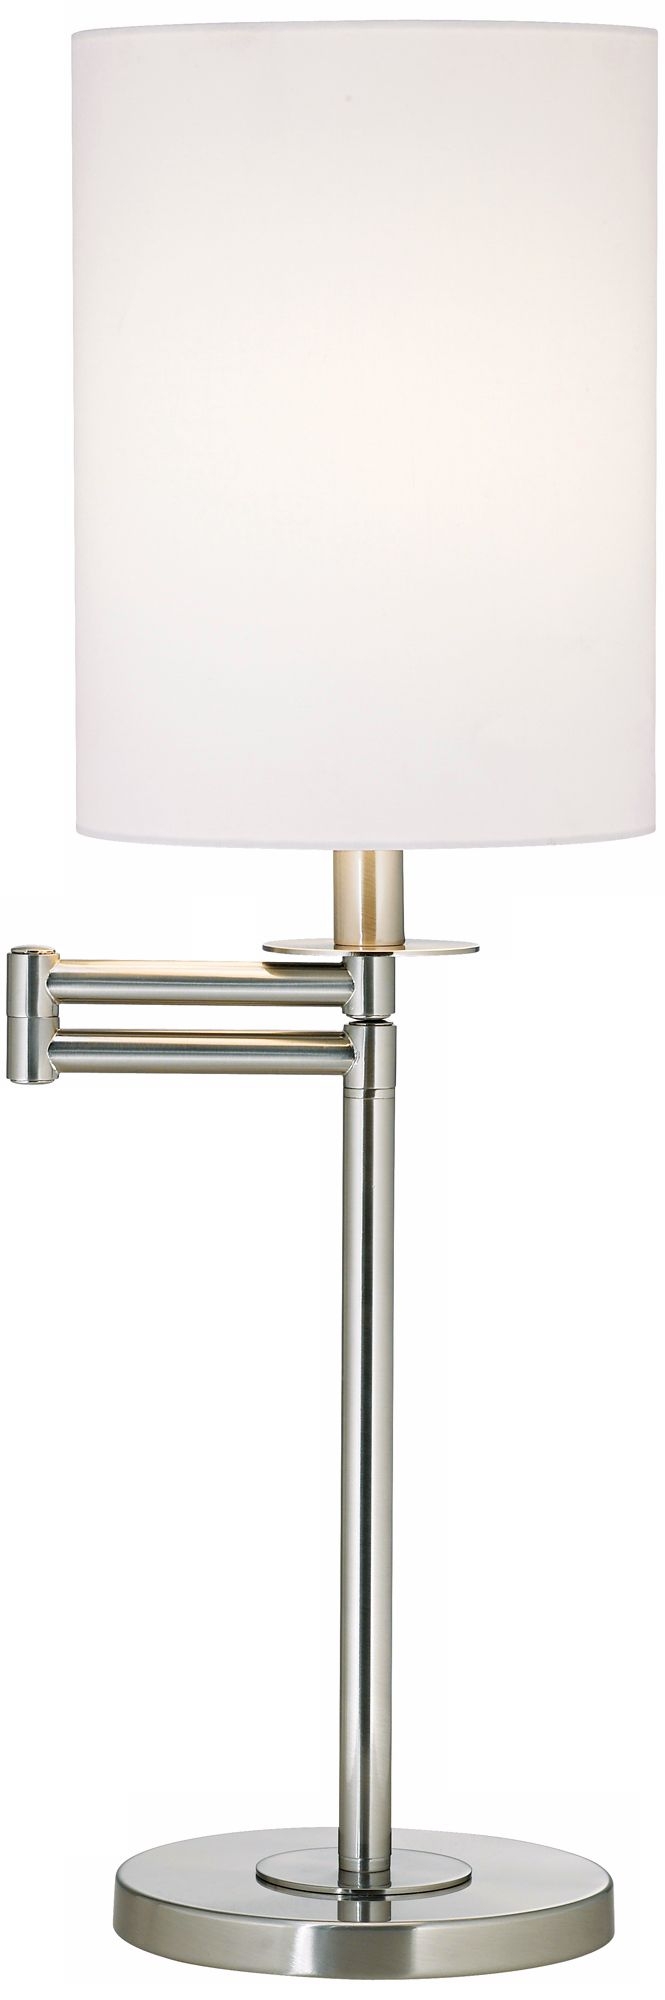 White Cotton Brushed Nickel Finish Swing Arm Desk Lamp - Image 0